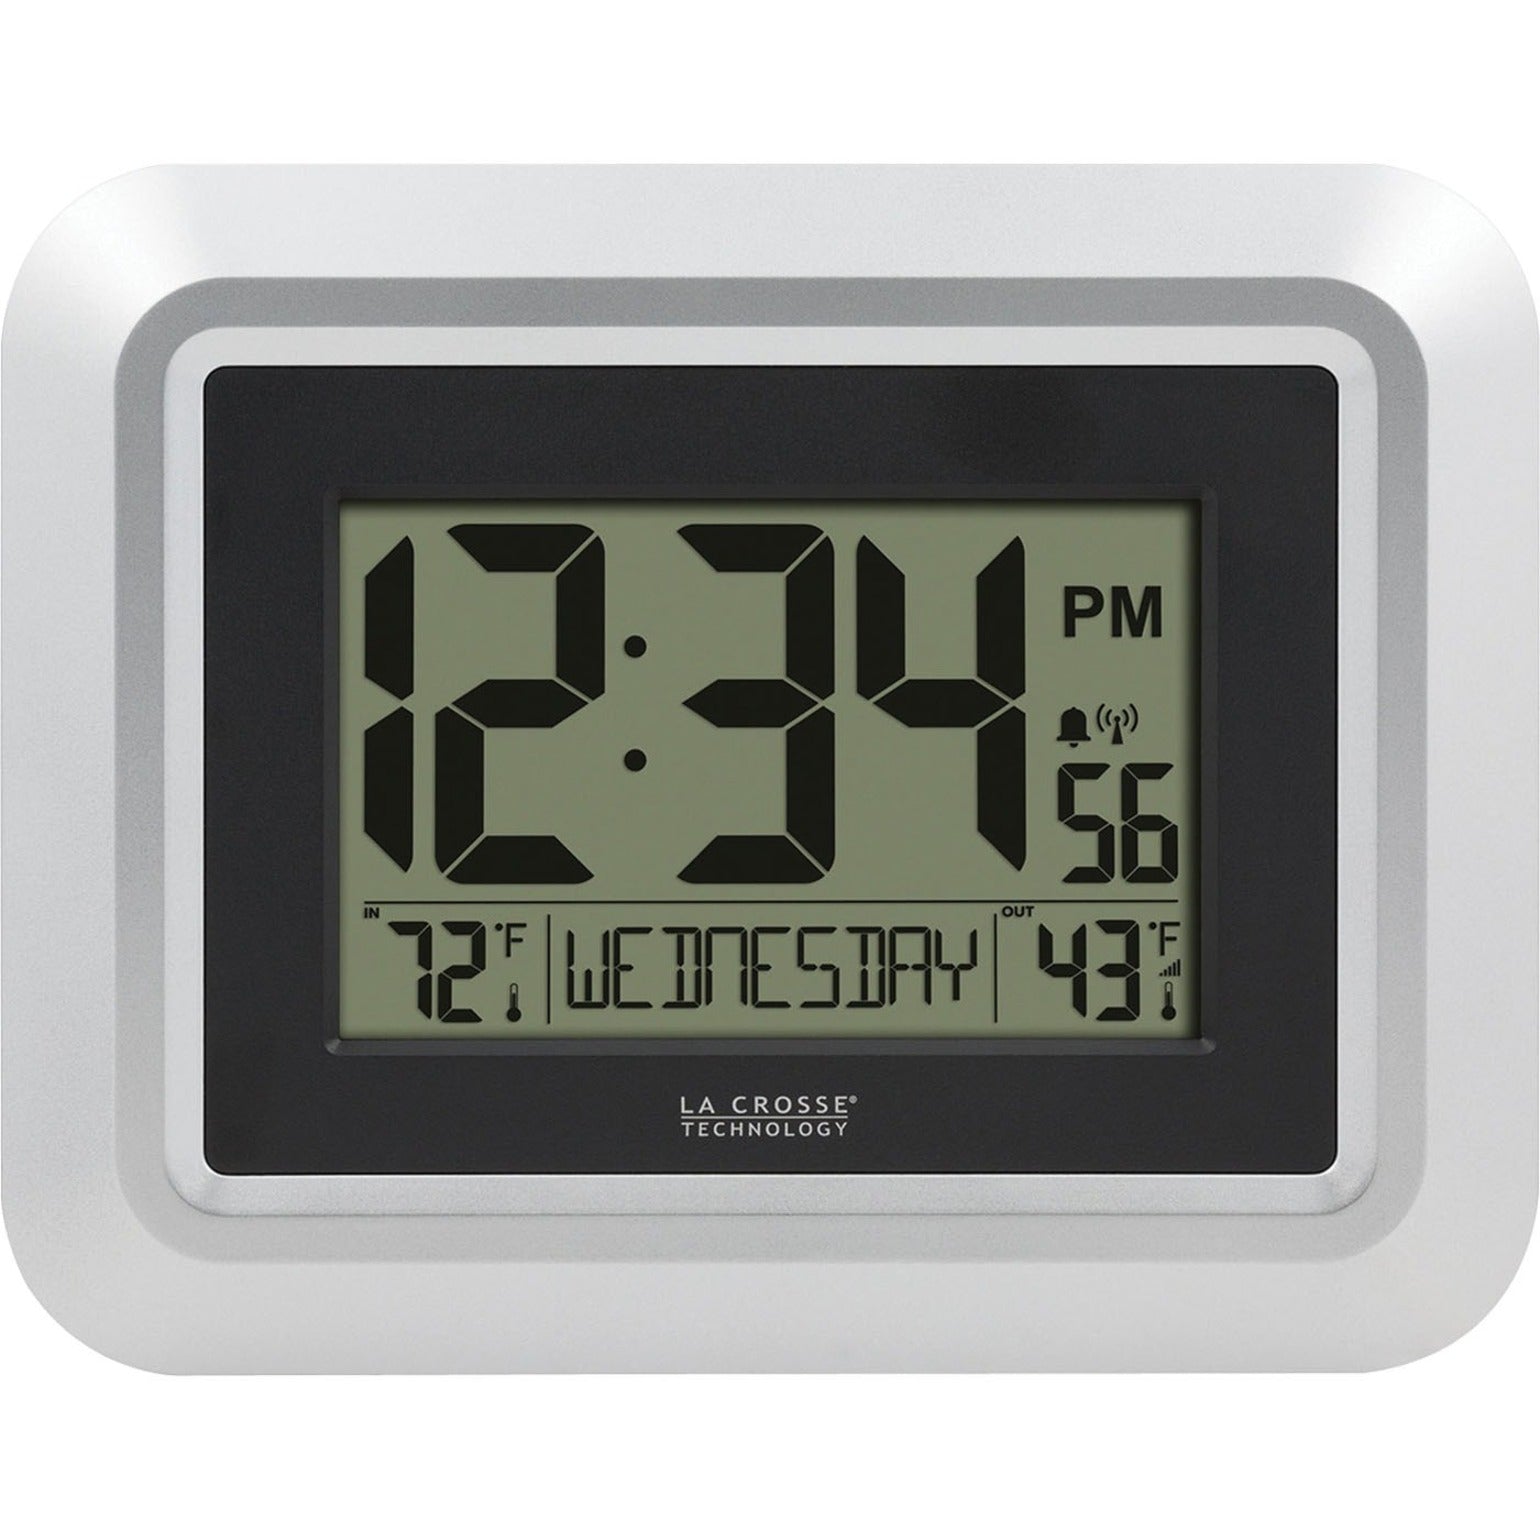 La Crosse Technology 513-1918S-INT Atomic Digital Wall Clock with Indoor/Outdoor Temperature, Temperature Display, 12/24hr Format, Calendar, Daylight Saving, Alarm, Snooze, Wall Mountable, Battery Indicator